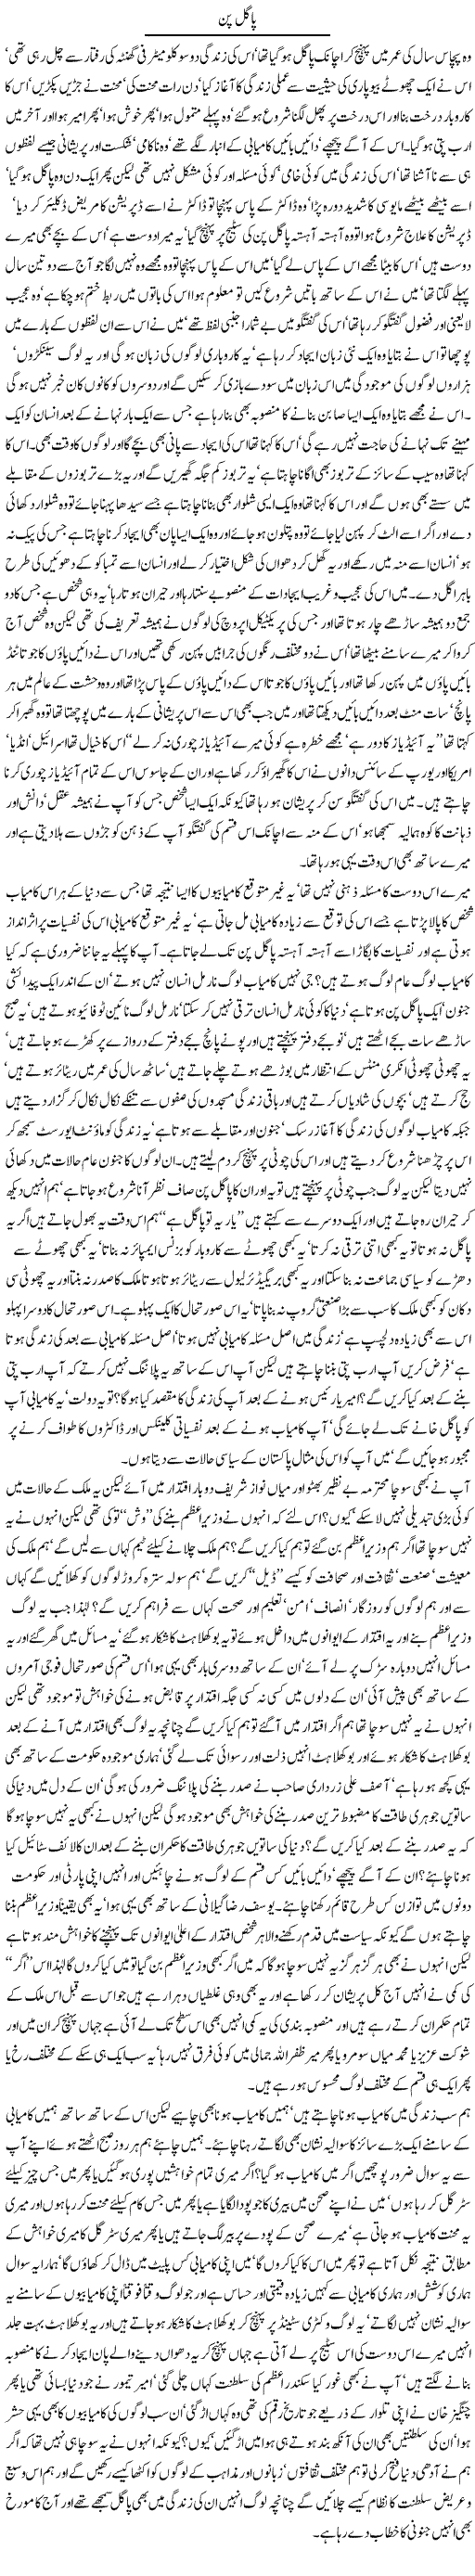 Mental Express Column Javed Chaudhry 28 November 2010